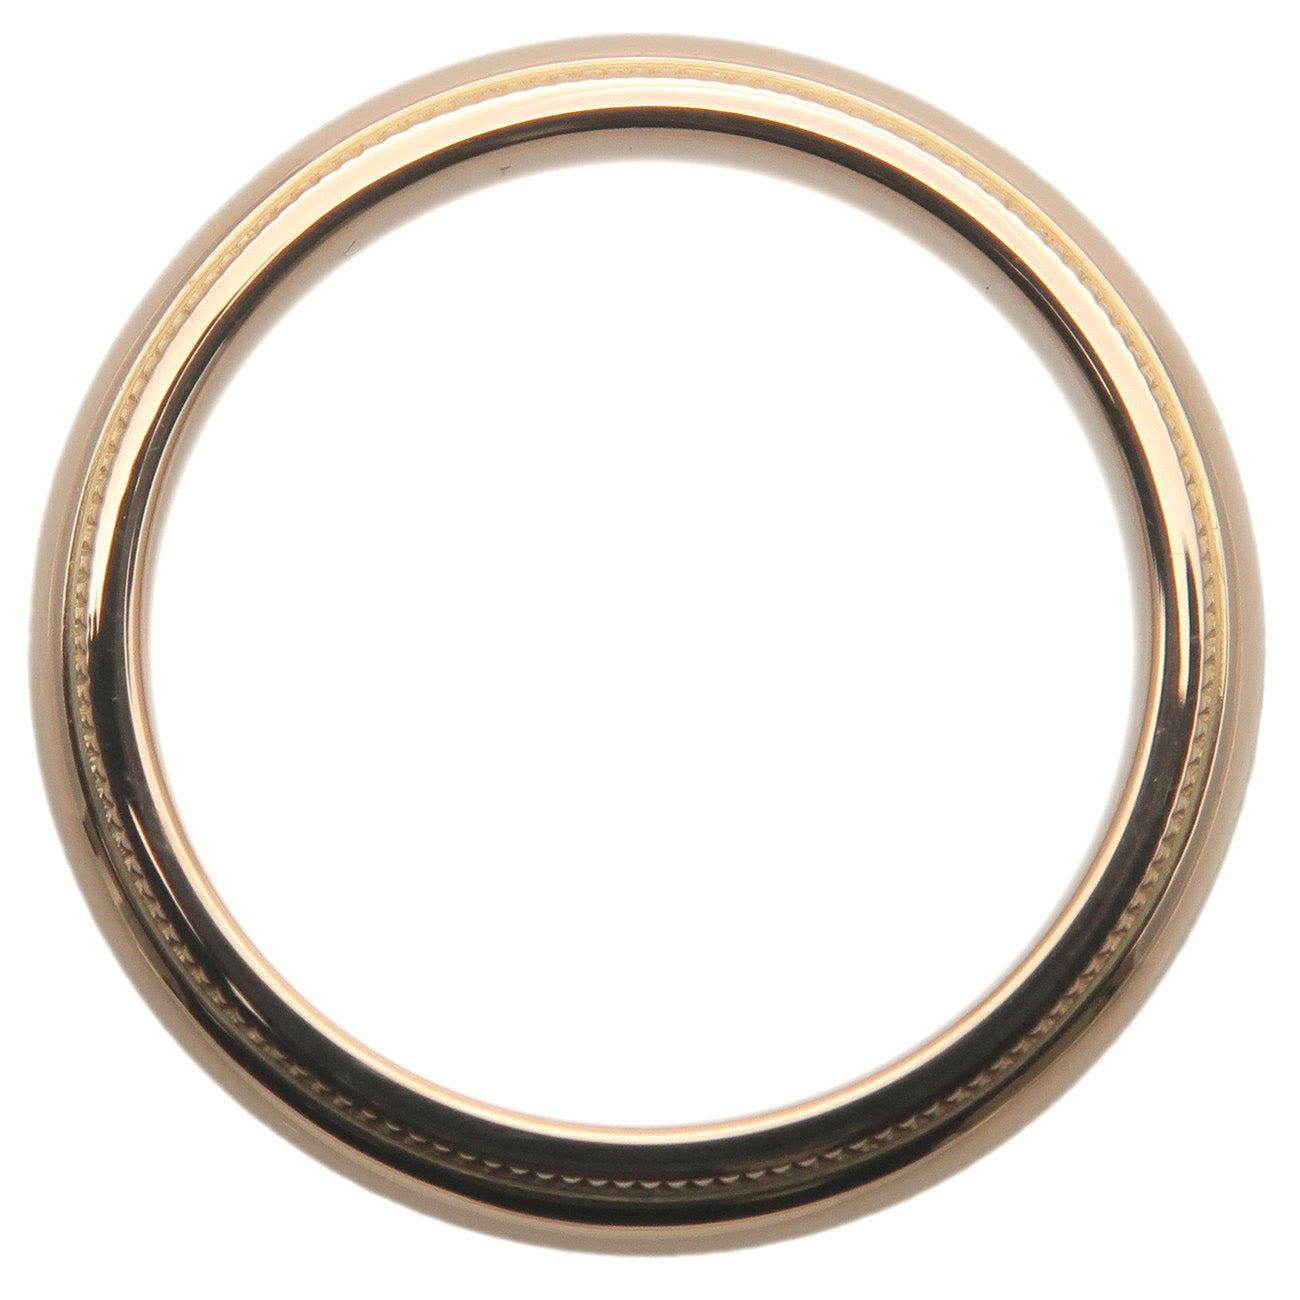 Tiffany&Co. Milgrain Band Ring 4mm K18 750PG Rose Gold US4.5 EU48